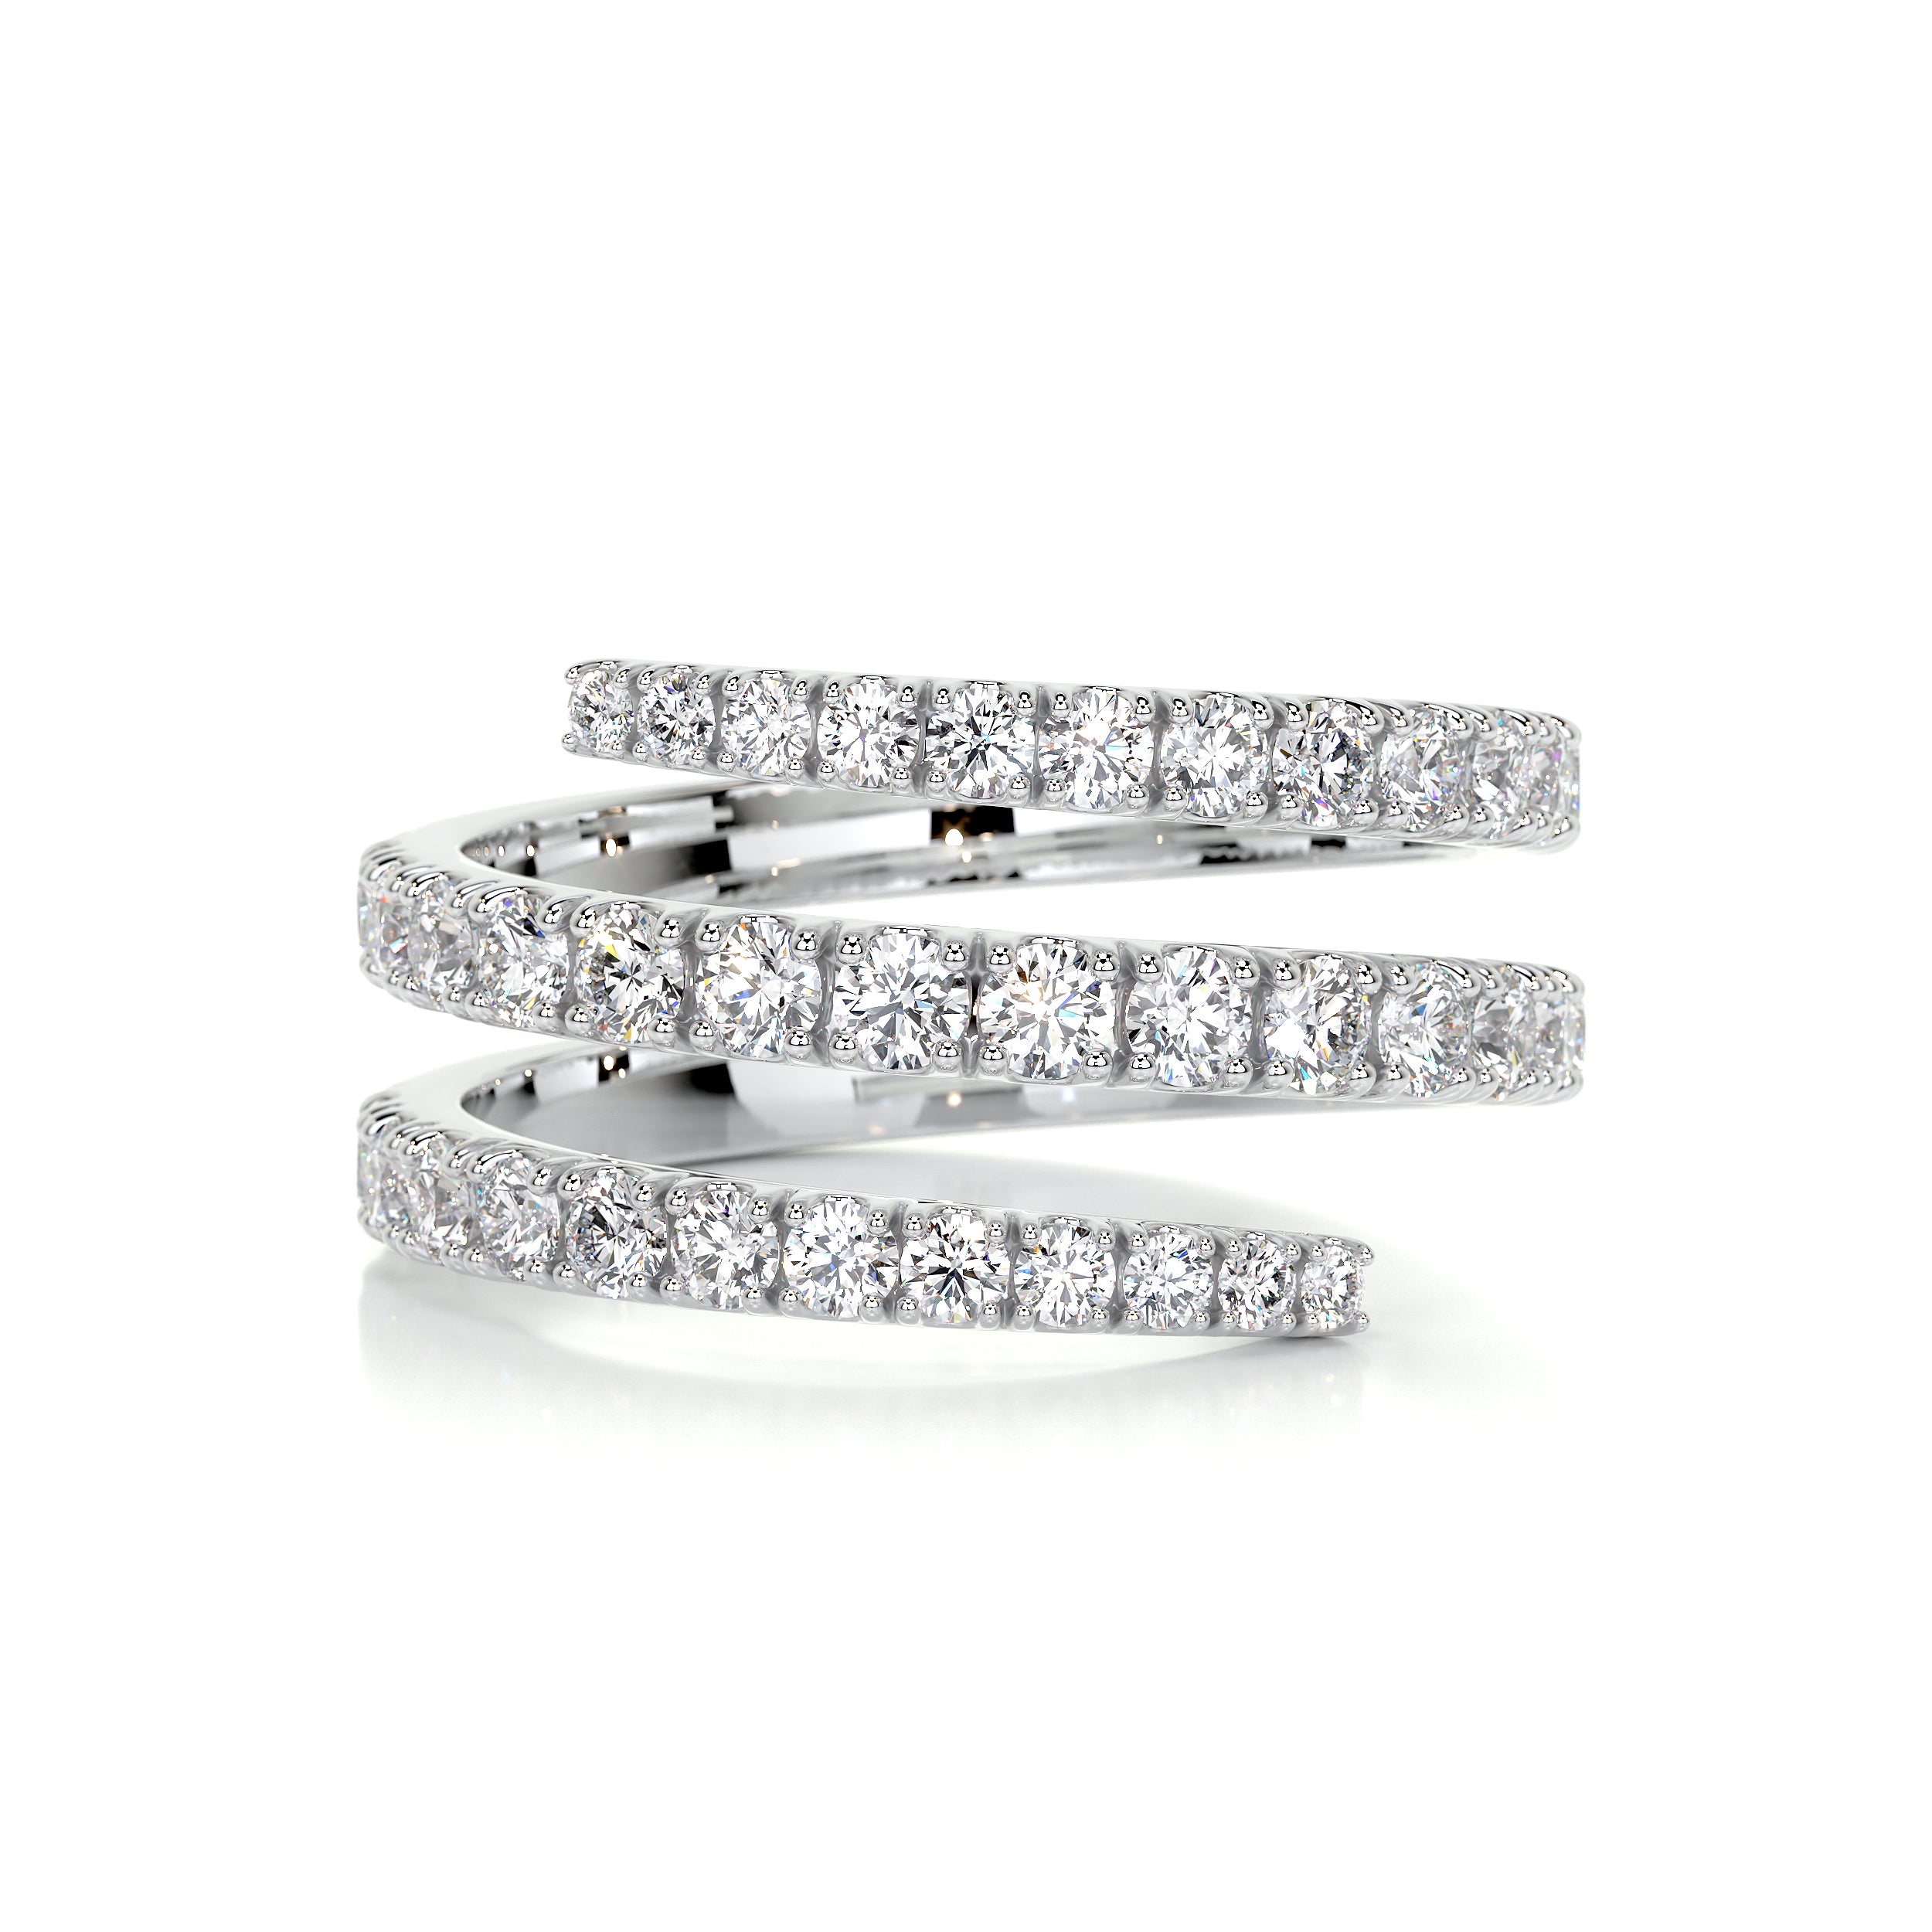 Carrie Diamond Wedding Ring   (1 Carat) -18K White Gold